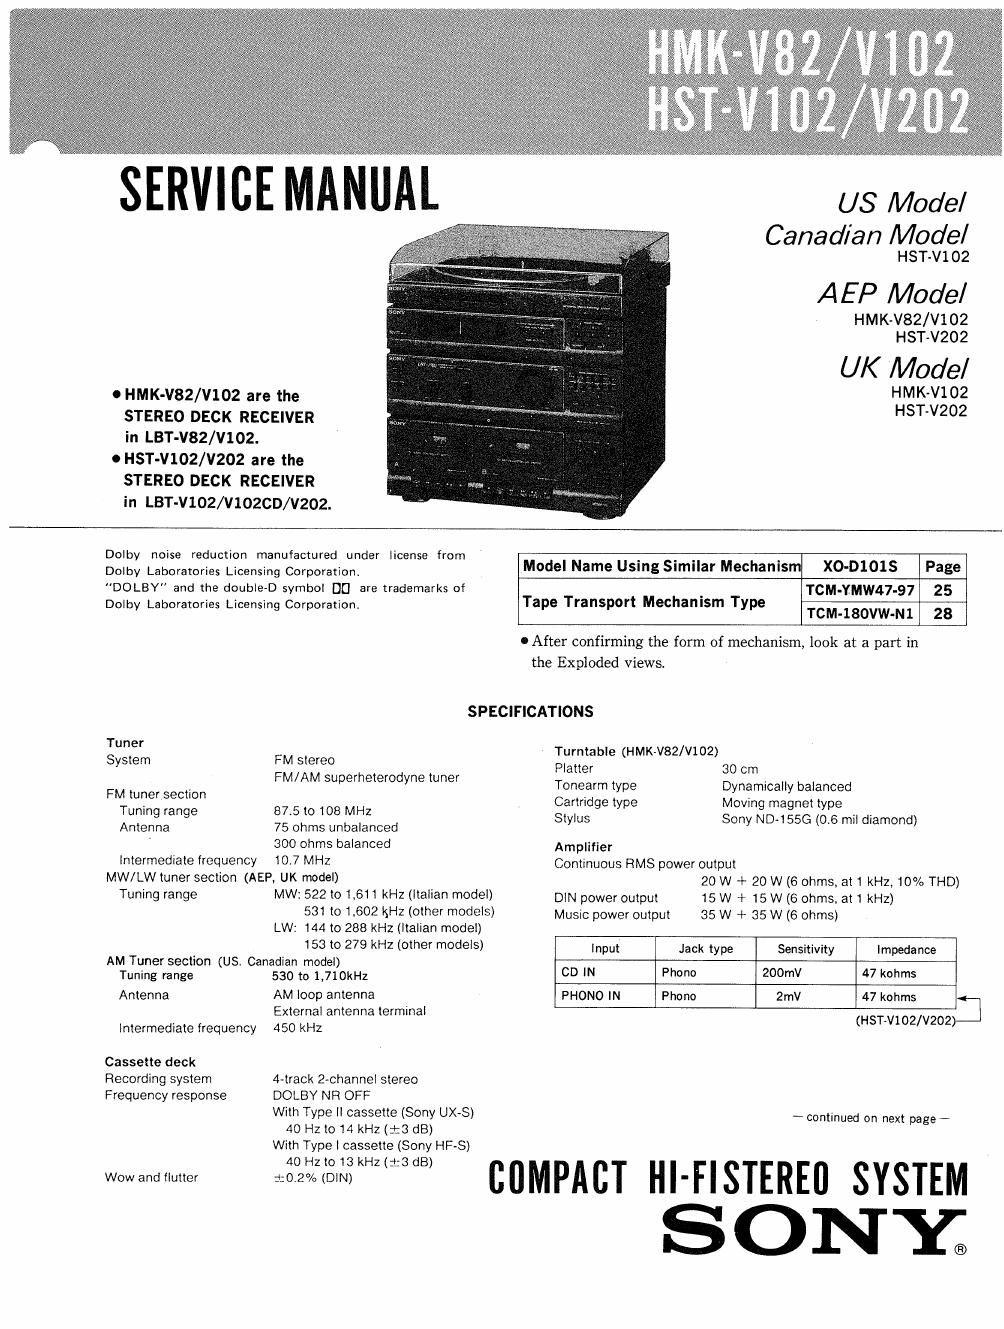 sony hmk v 102 service manual